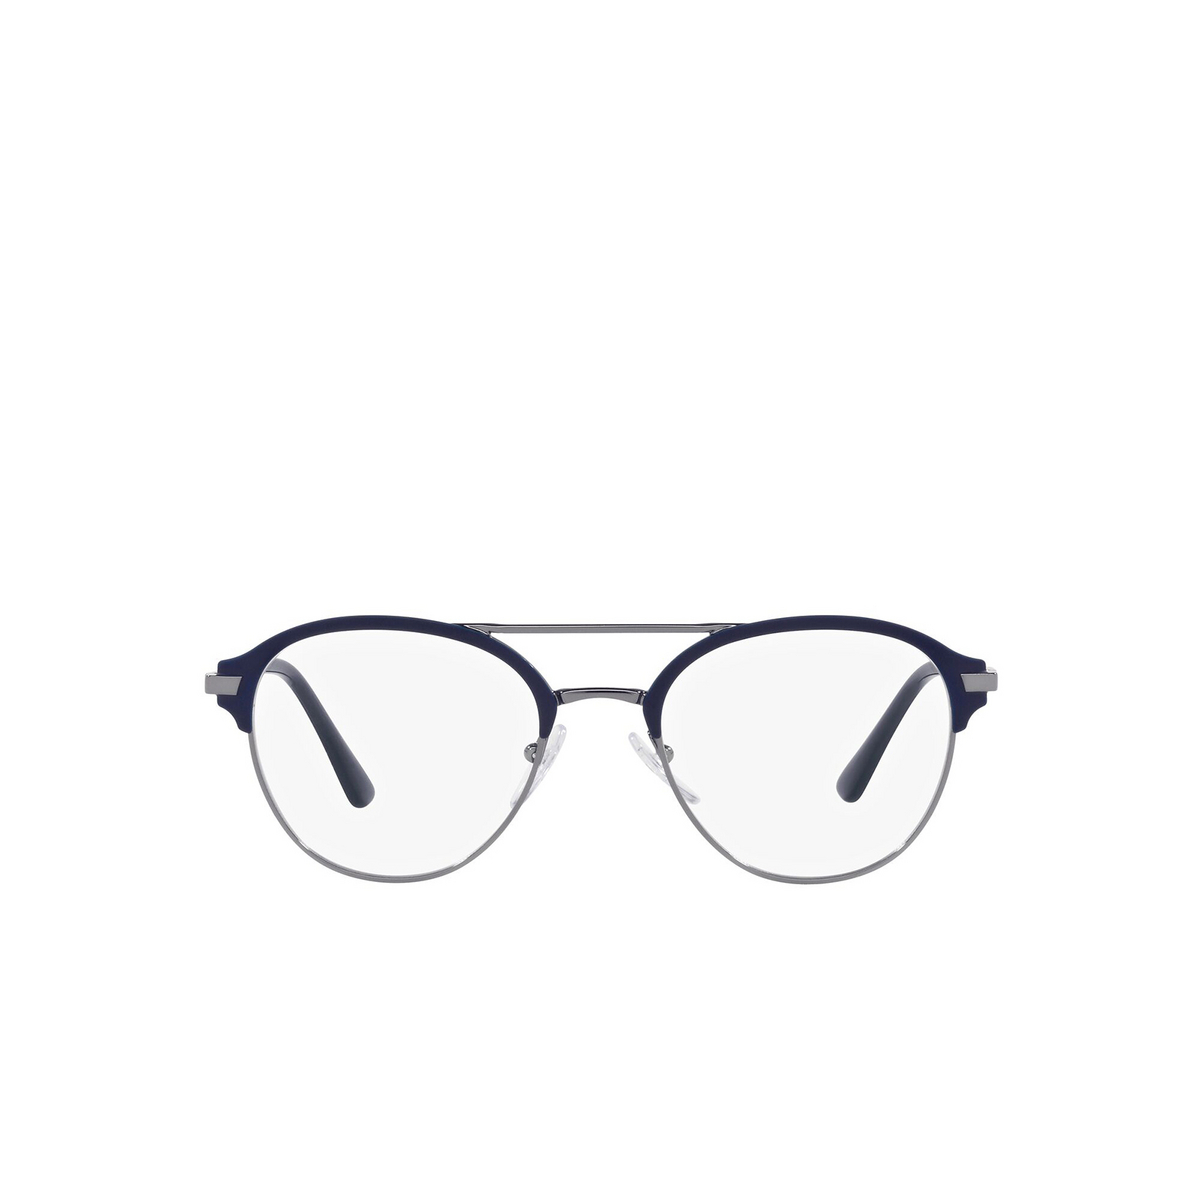 Prada® Aviator Eyeglasses: PR 61WV color 02N1O1 Matte Baltic / Gunmetal - front view